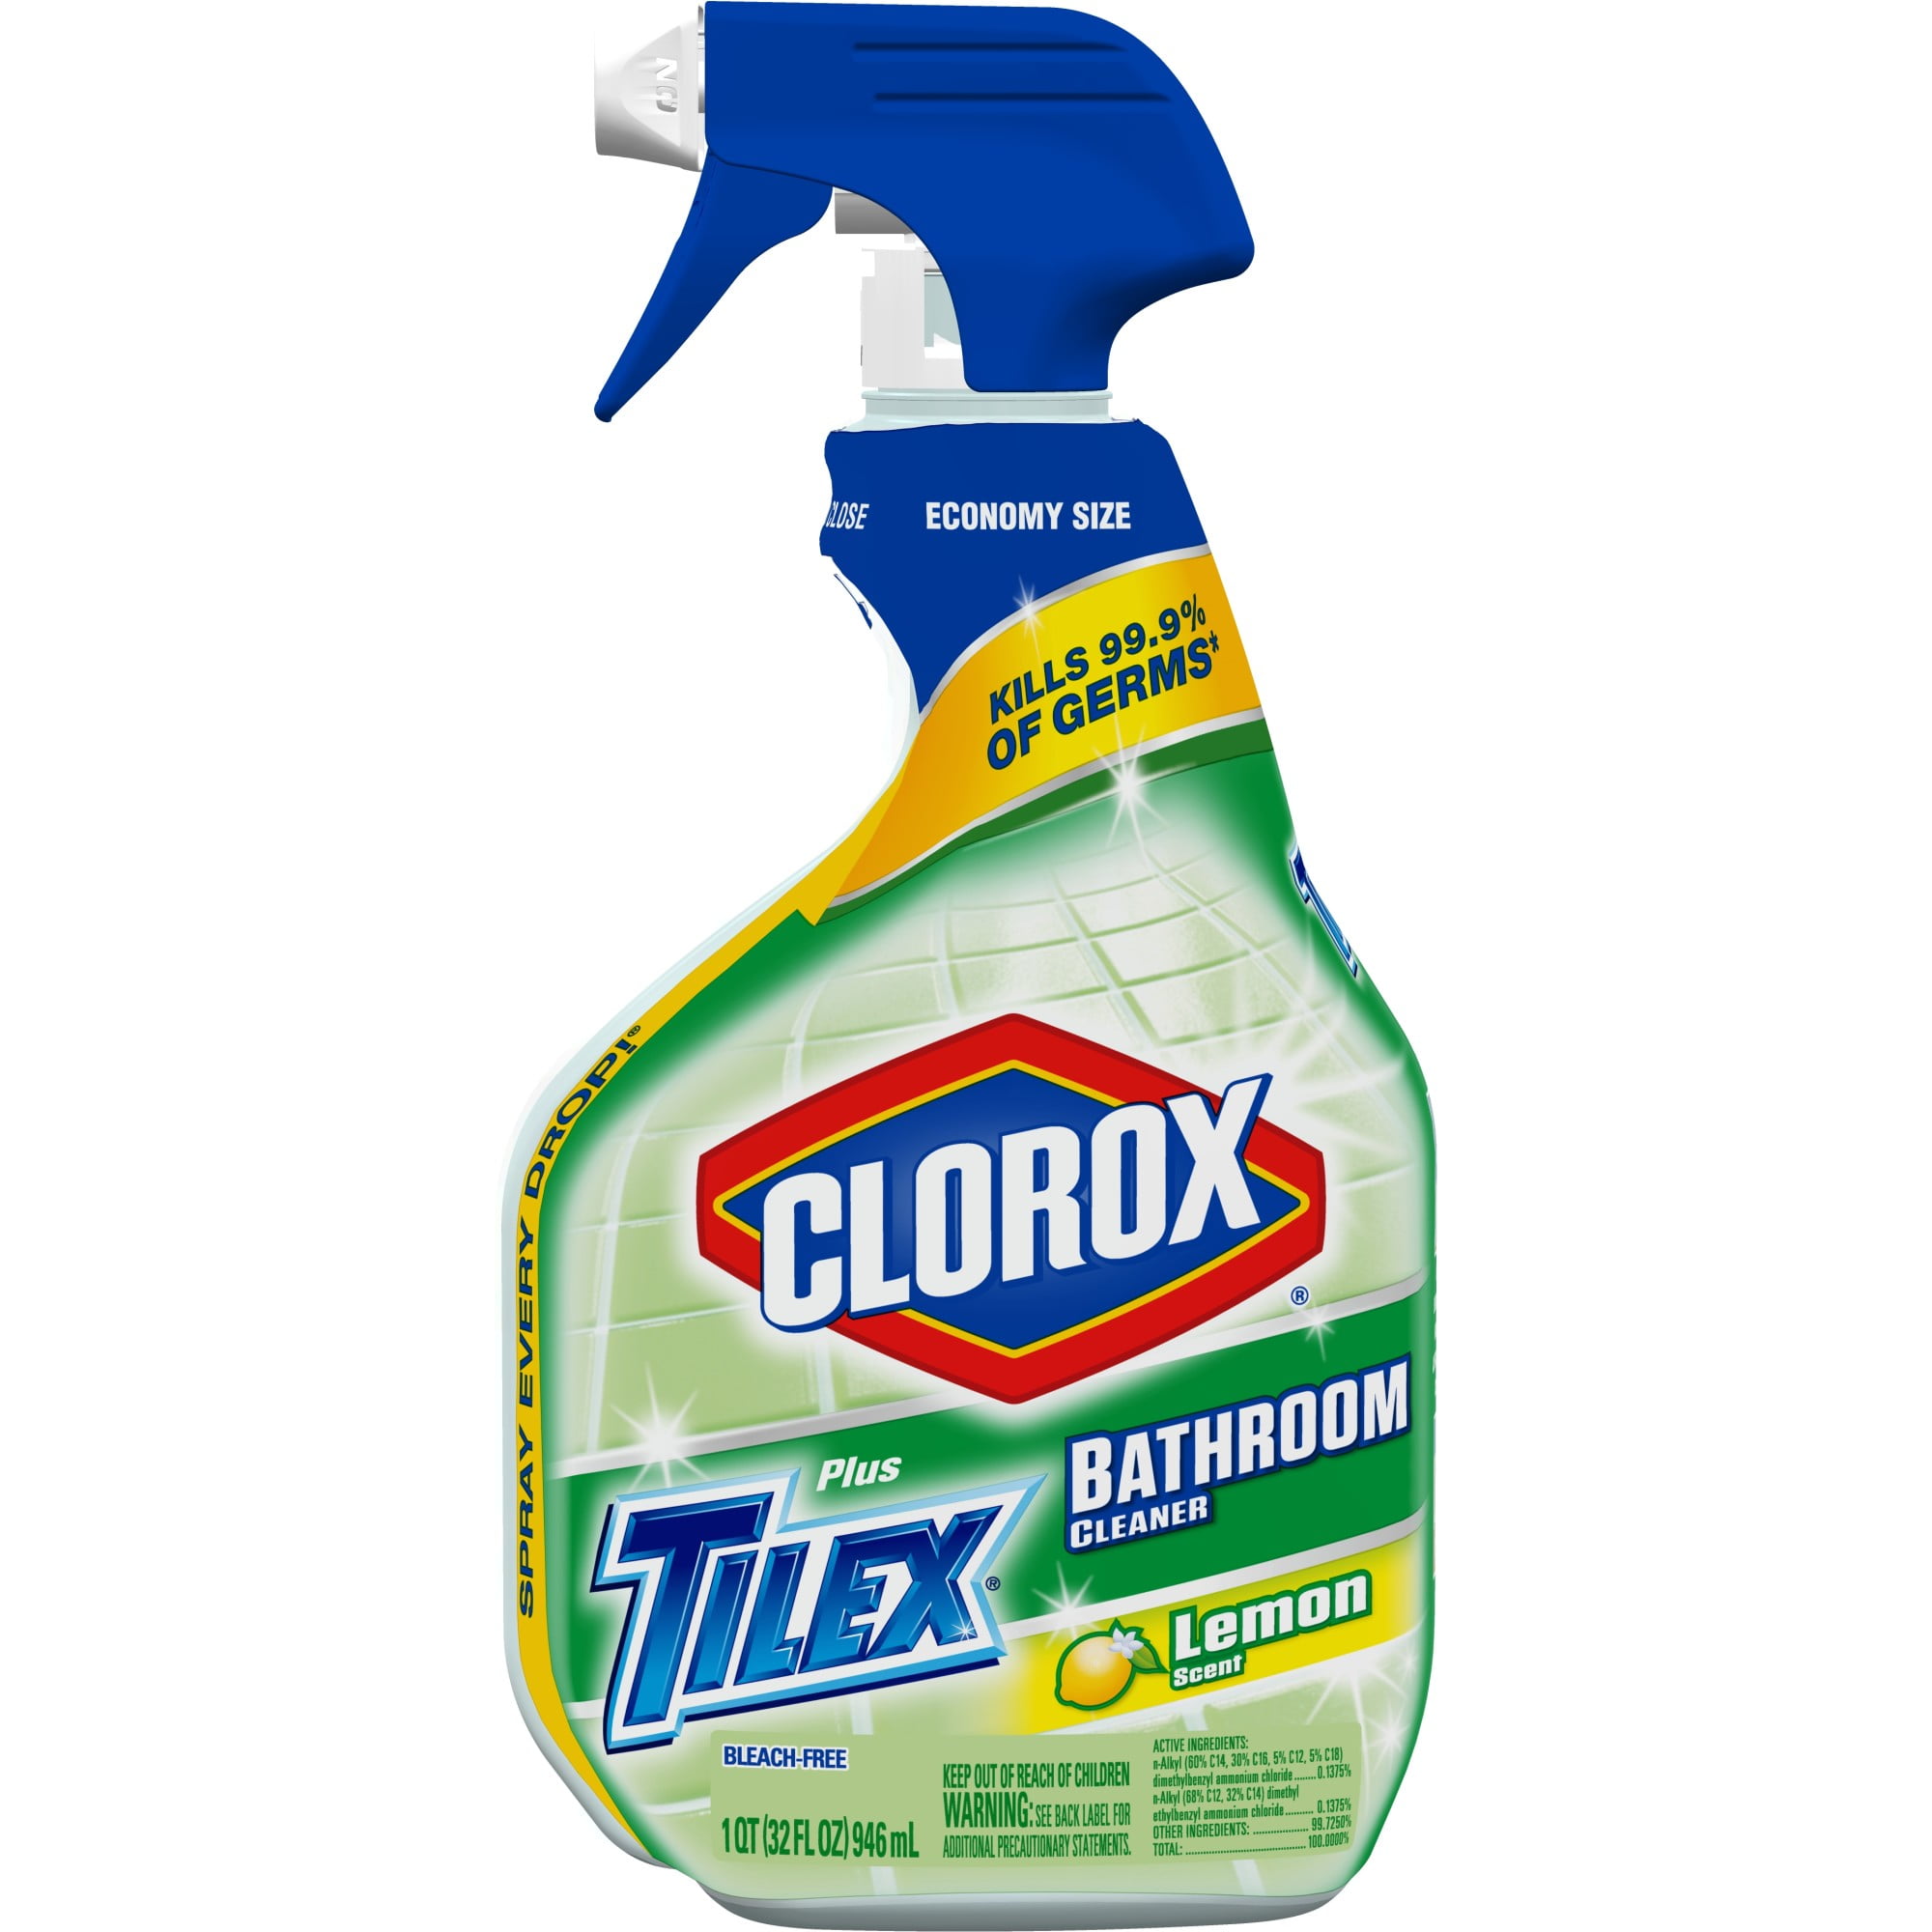 Clorox Plus Tilex Bathroom Cleaner, Spray Bottle, Lemon